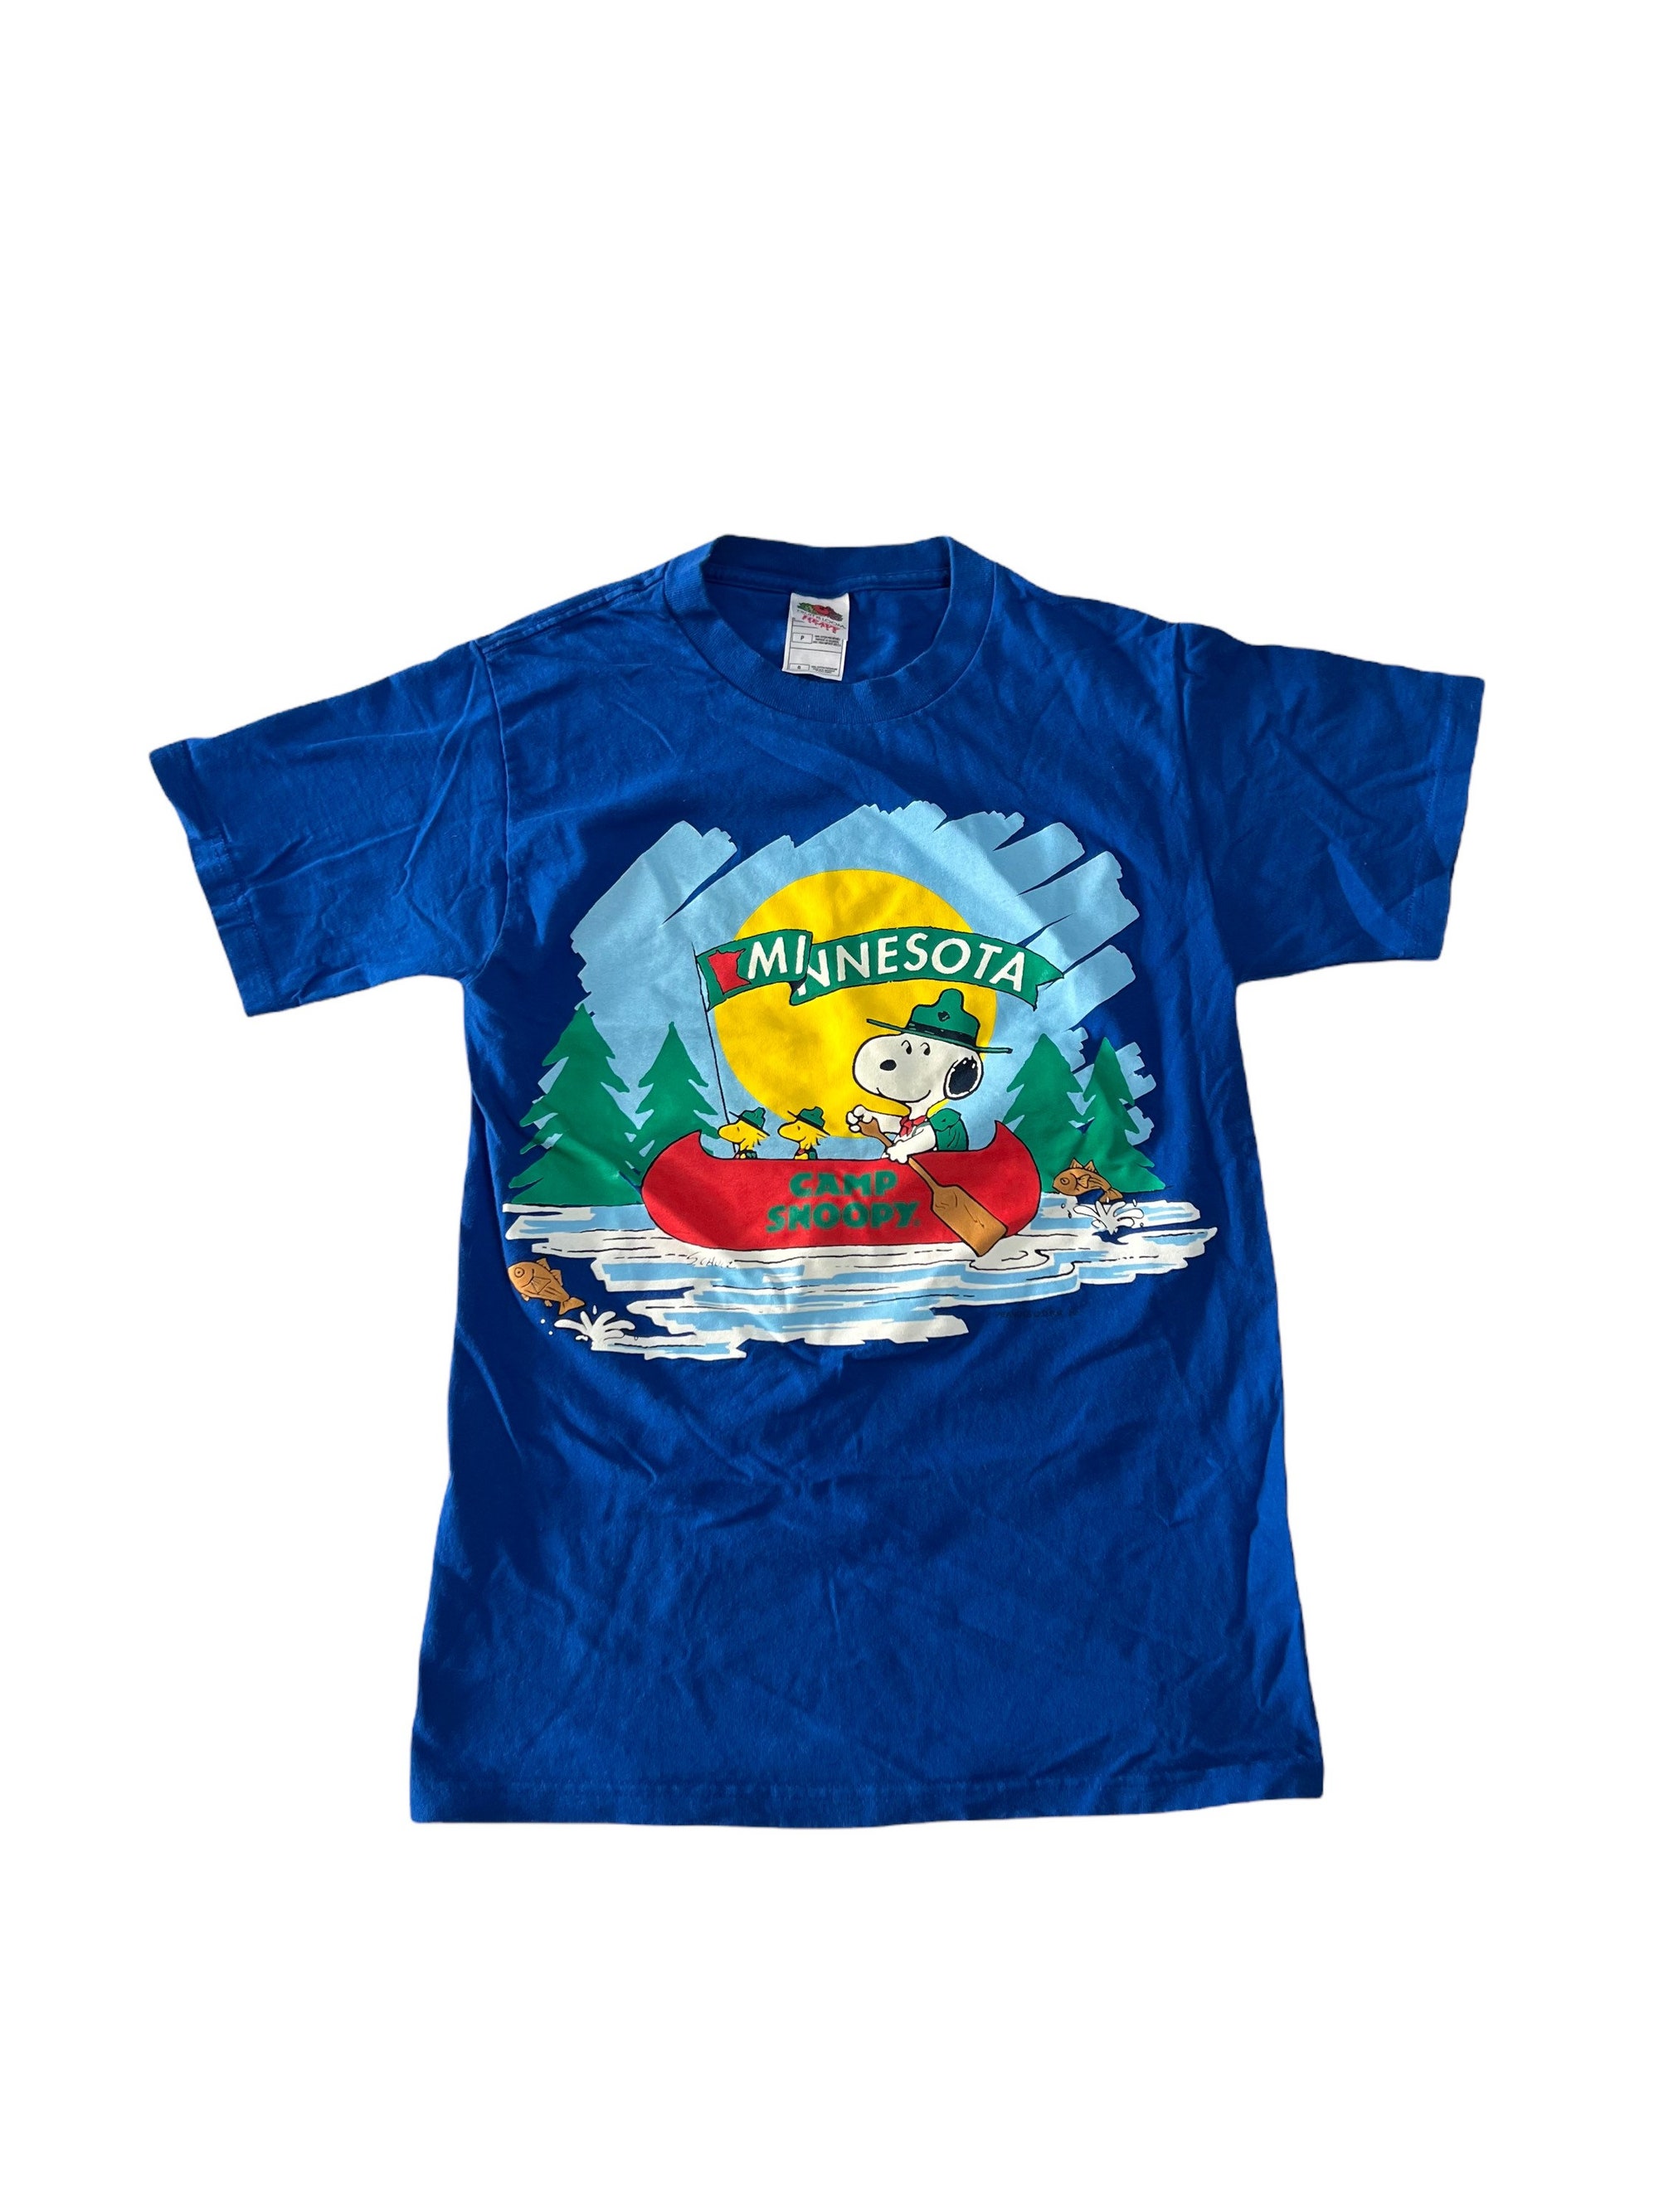 Discover Vintage 90s Camp Minnesota T-Shirt